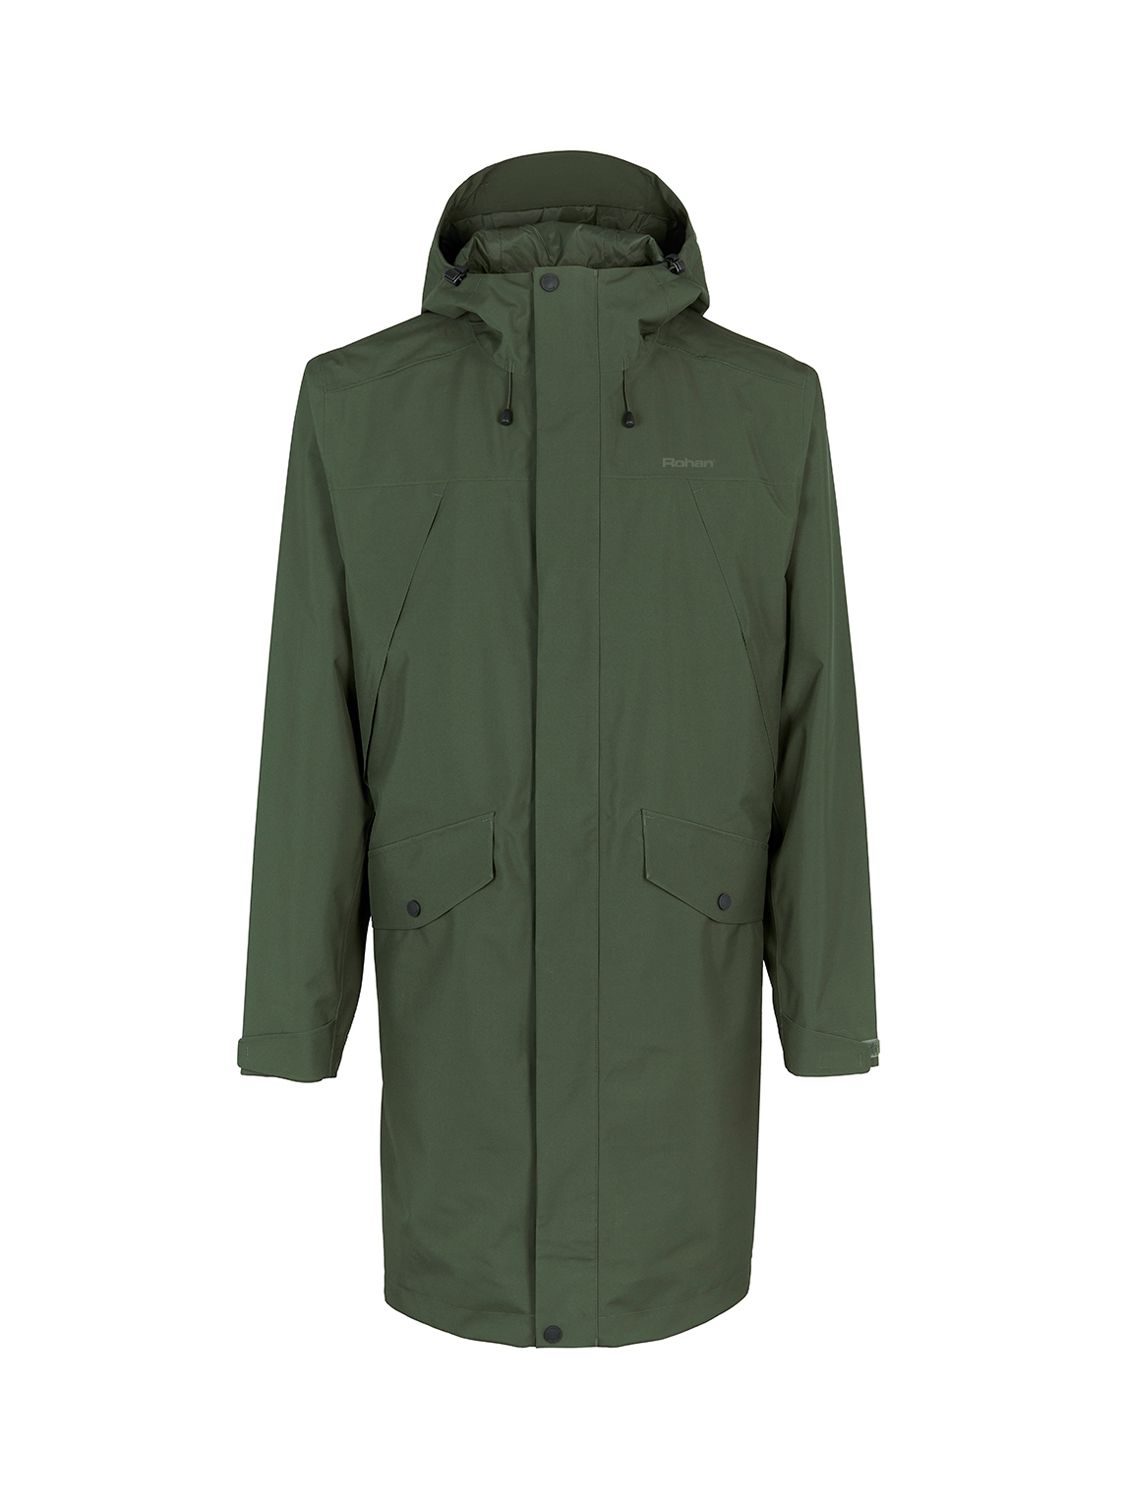 Rohan Kendal Men's Waterproof Jacket, Conifer Green at John Lewis ...